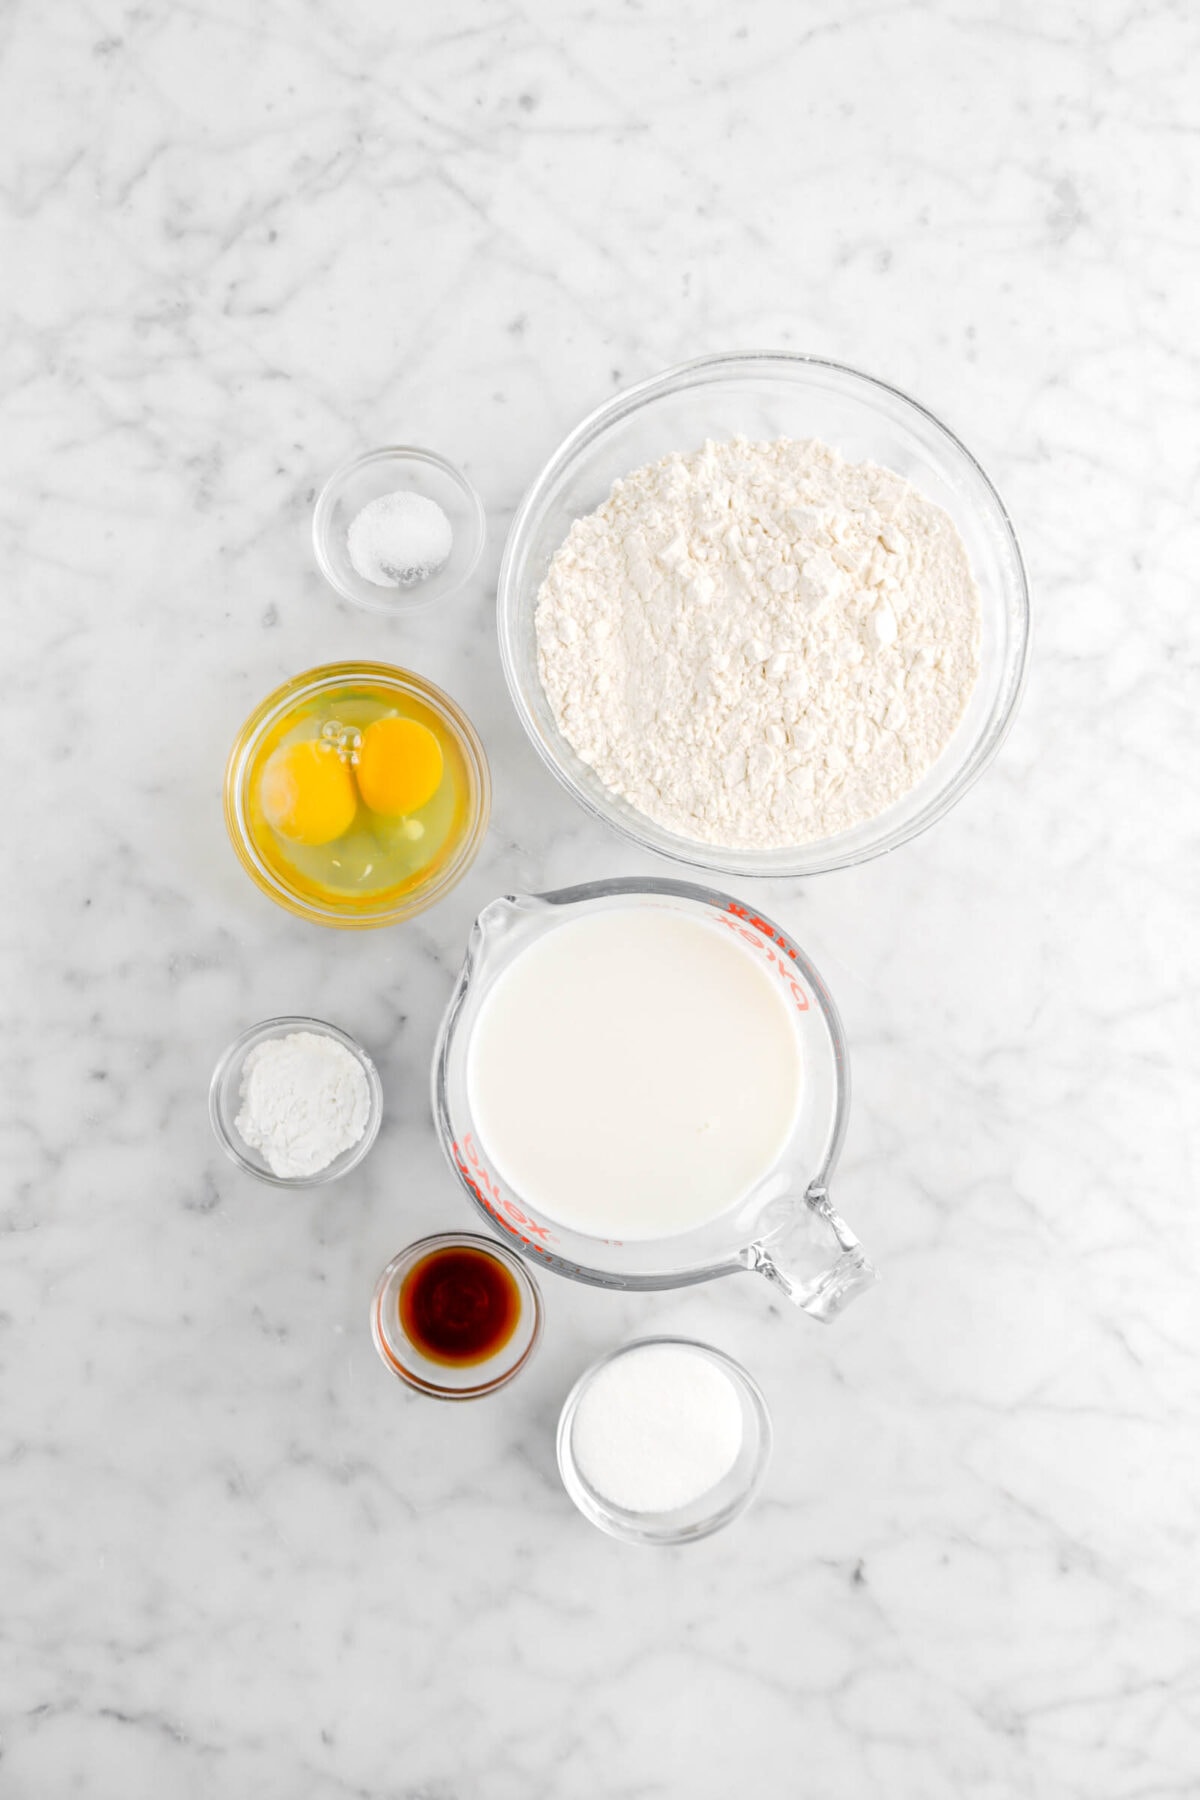 salt, flour, eggs, milk, baking powder, vanilla, and sugar in marble surface